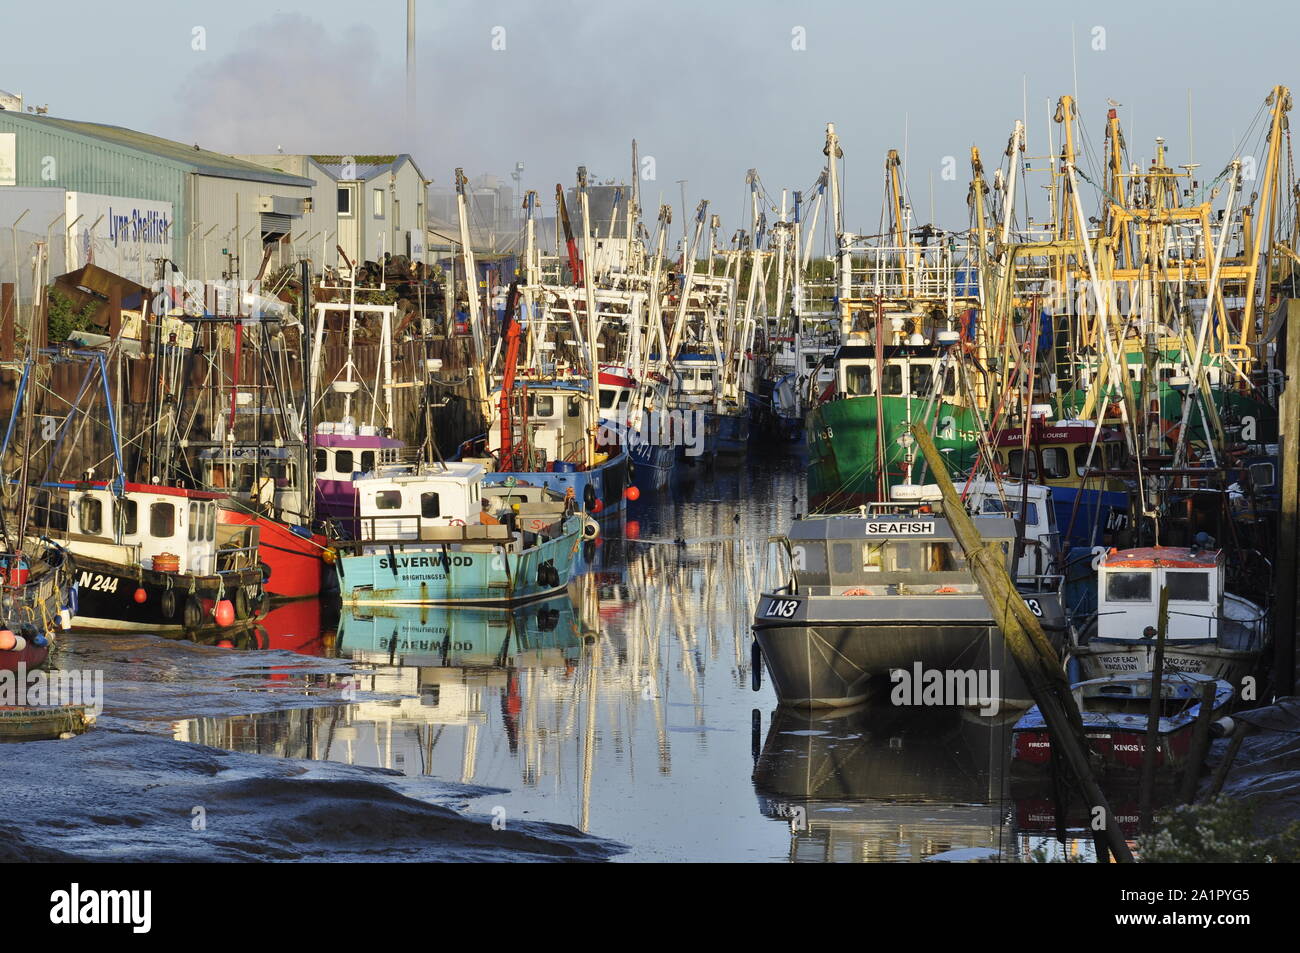 The Fisher Fleet, King's Lynn, Norfolk, UK. Stock Photo